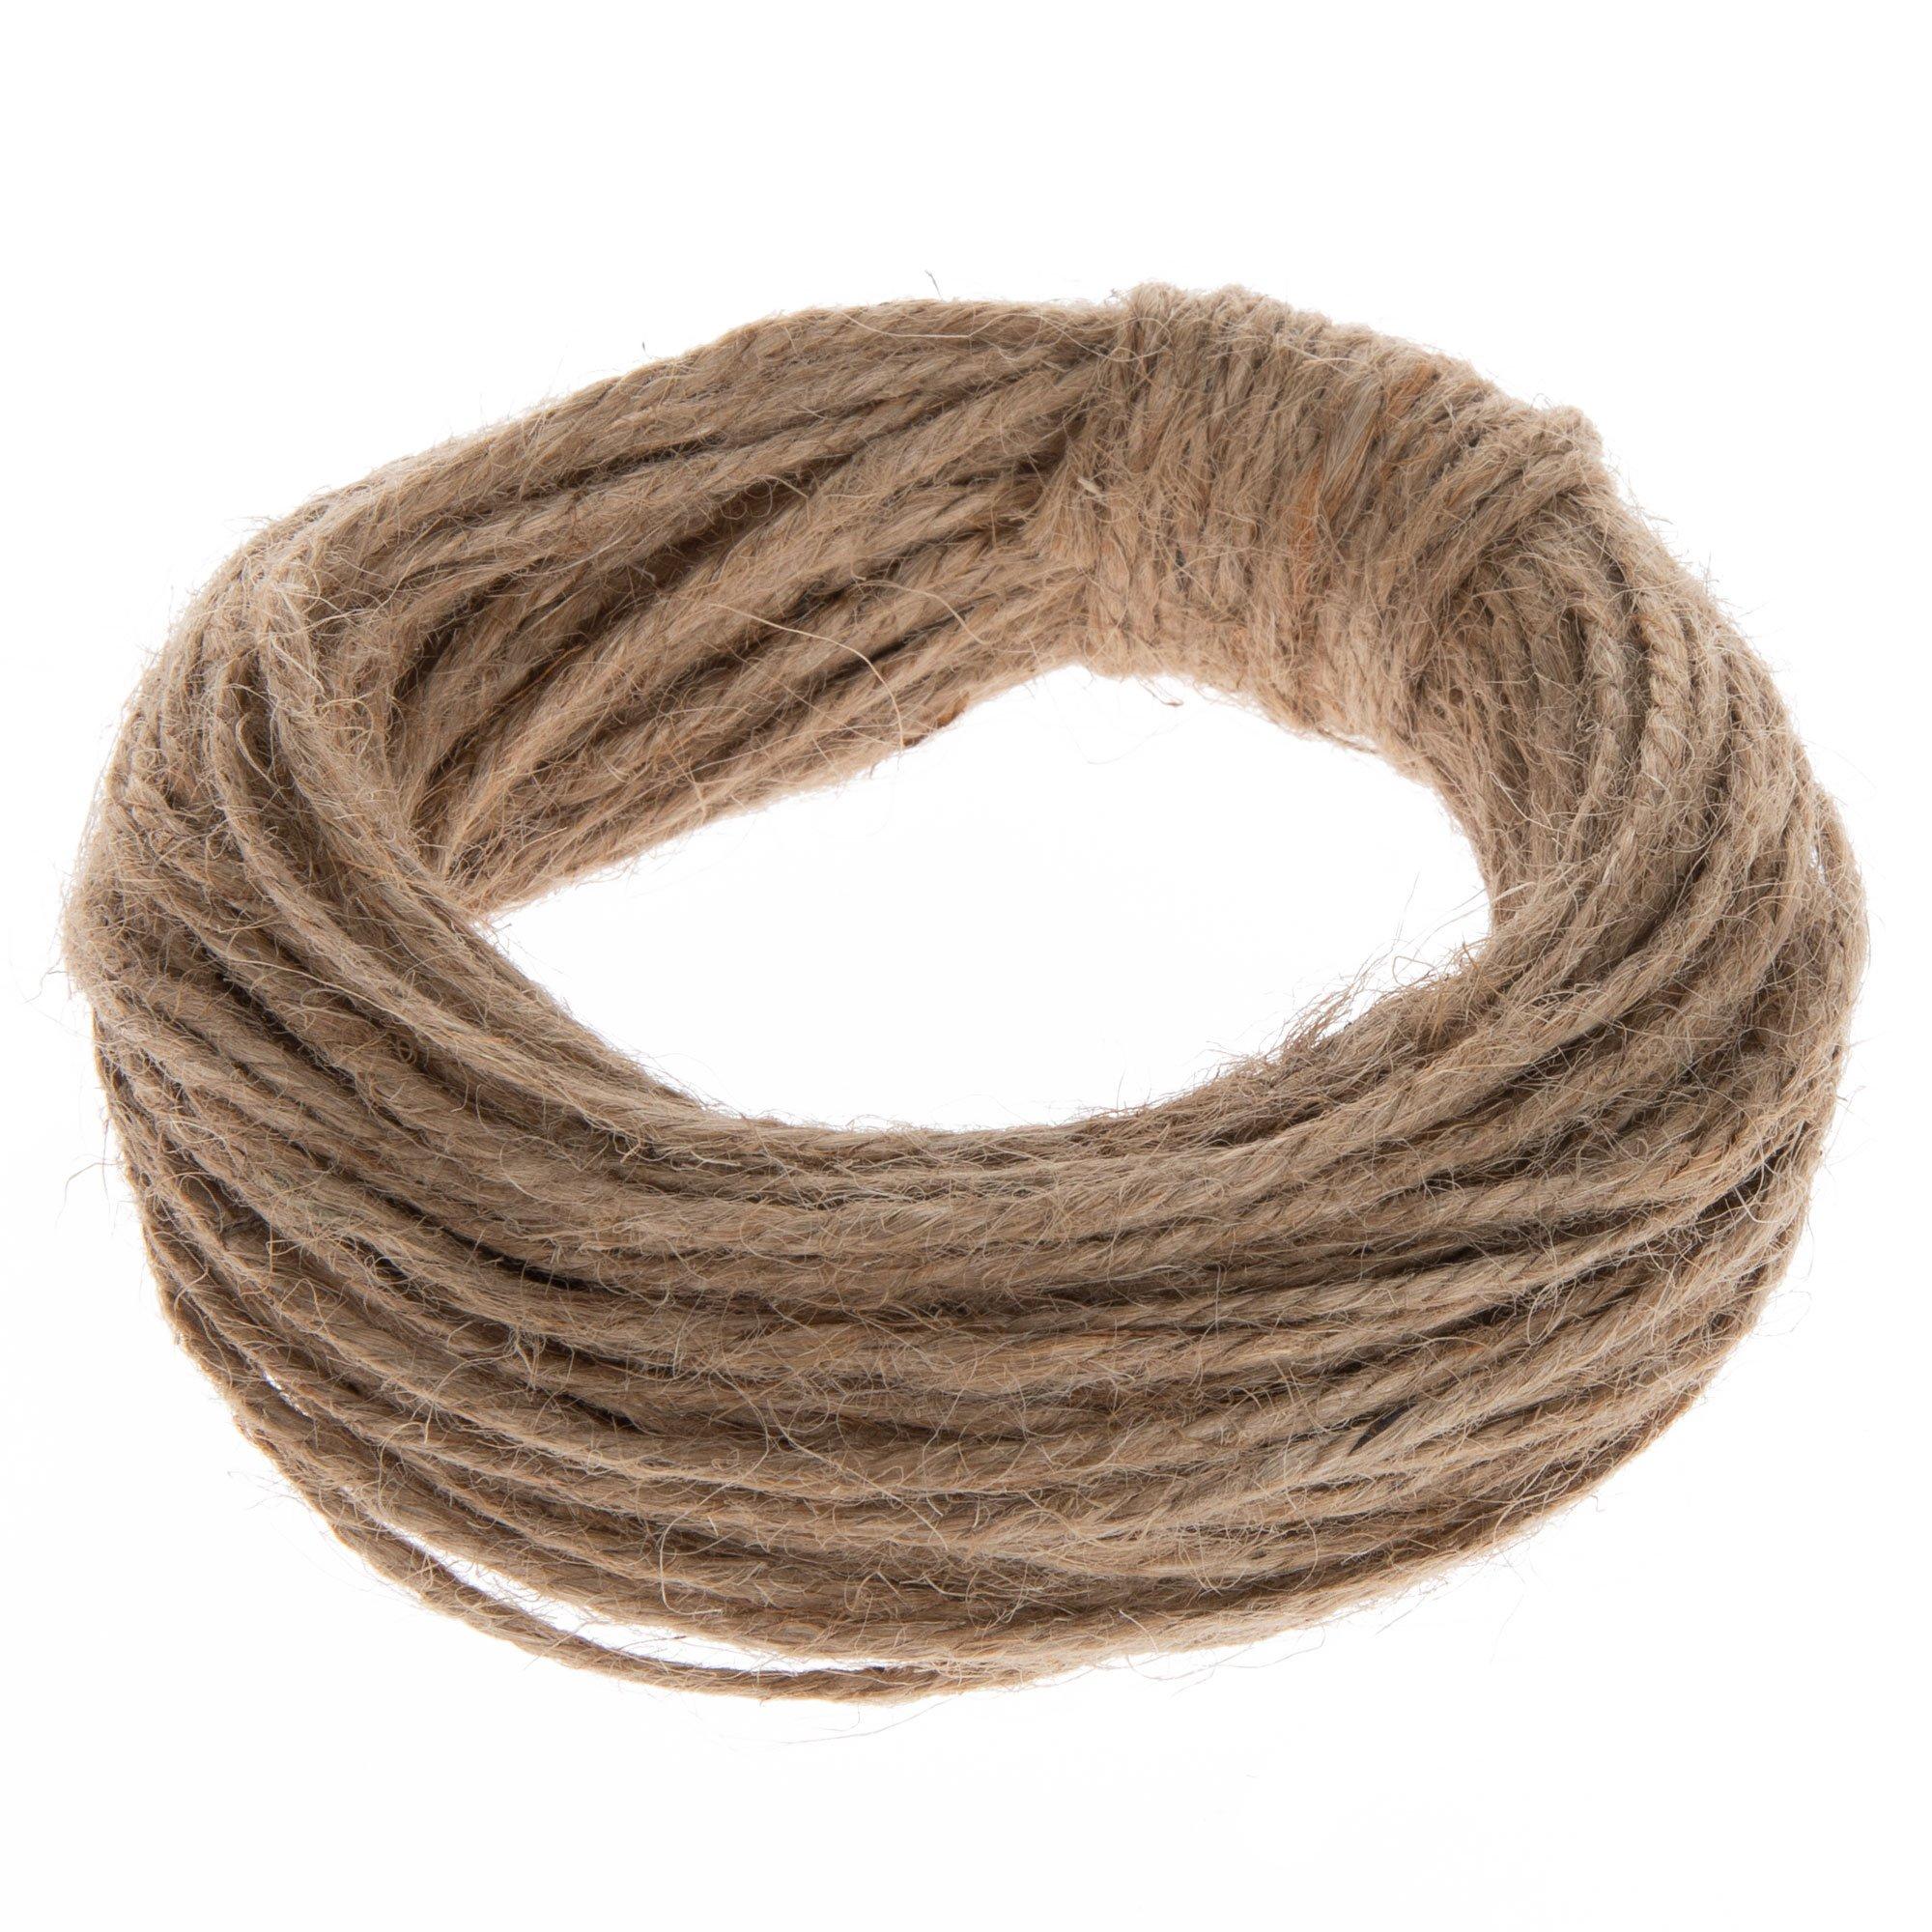 Natural Jute Cord, Chunky Hessian / Burlap Rope Arts & Crafts twine String,  Sisal 